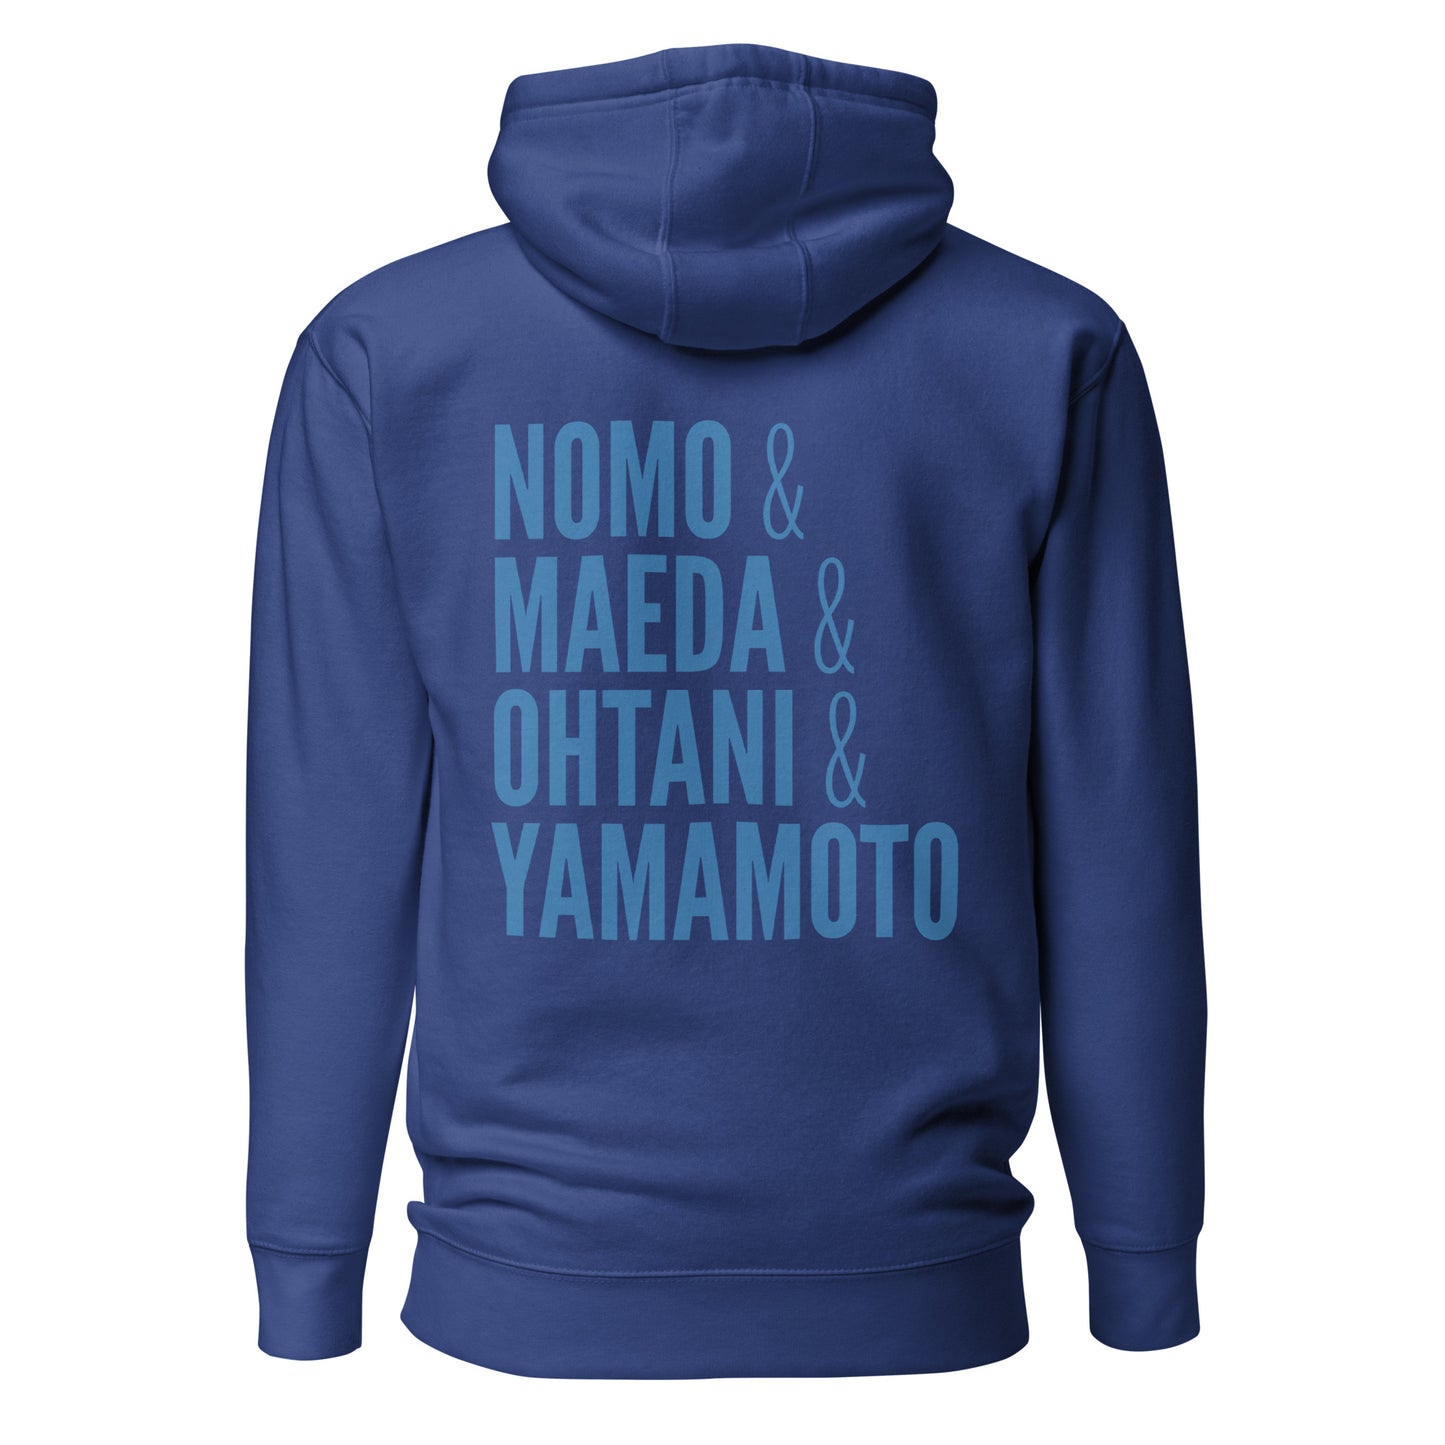 Nomo & Maeda & Ohtani & Yamamoto Pullover Hoodie